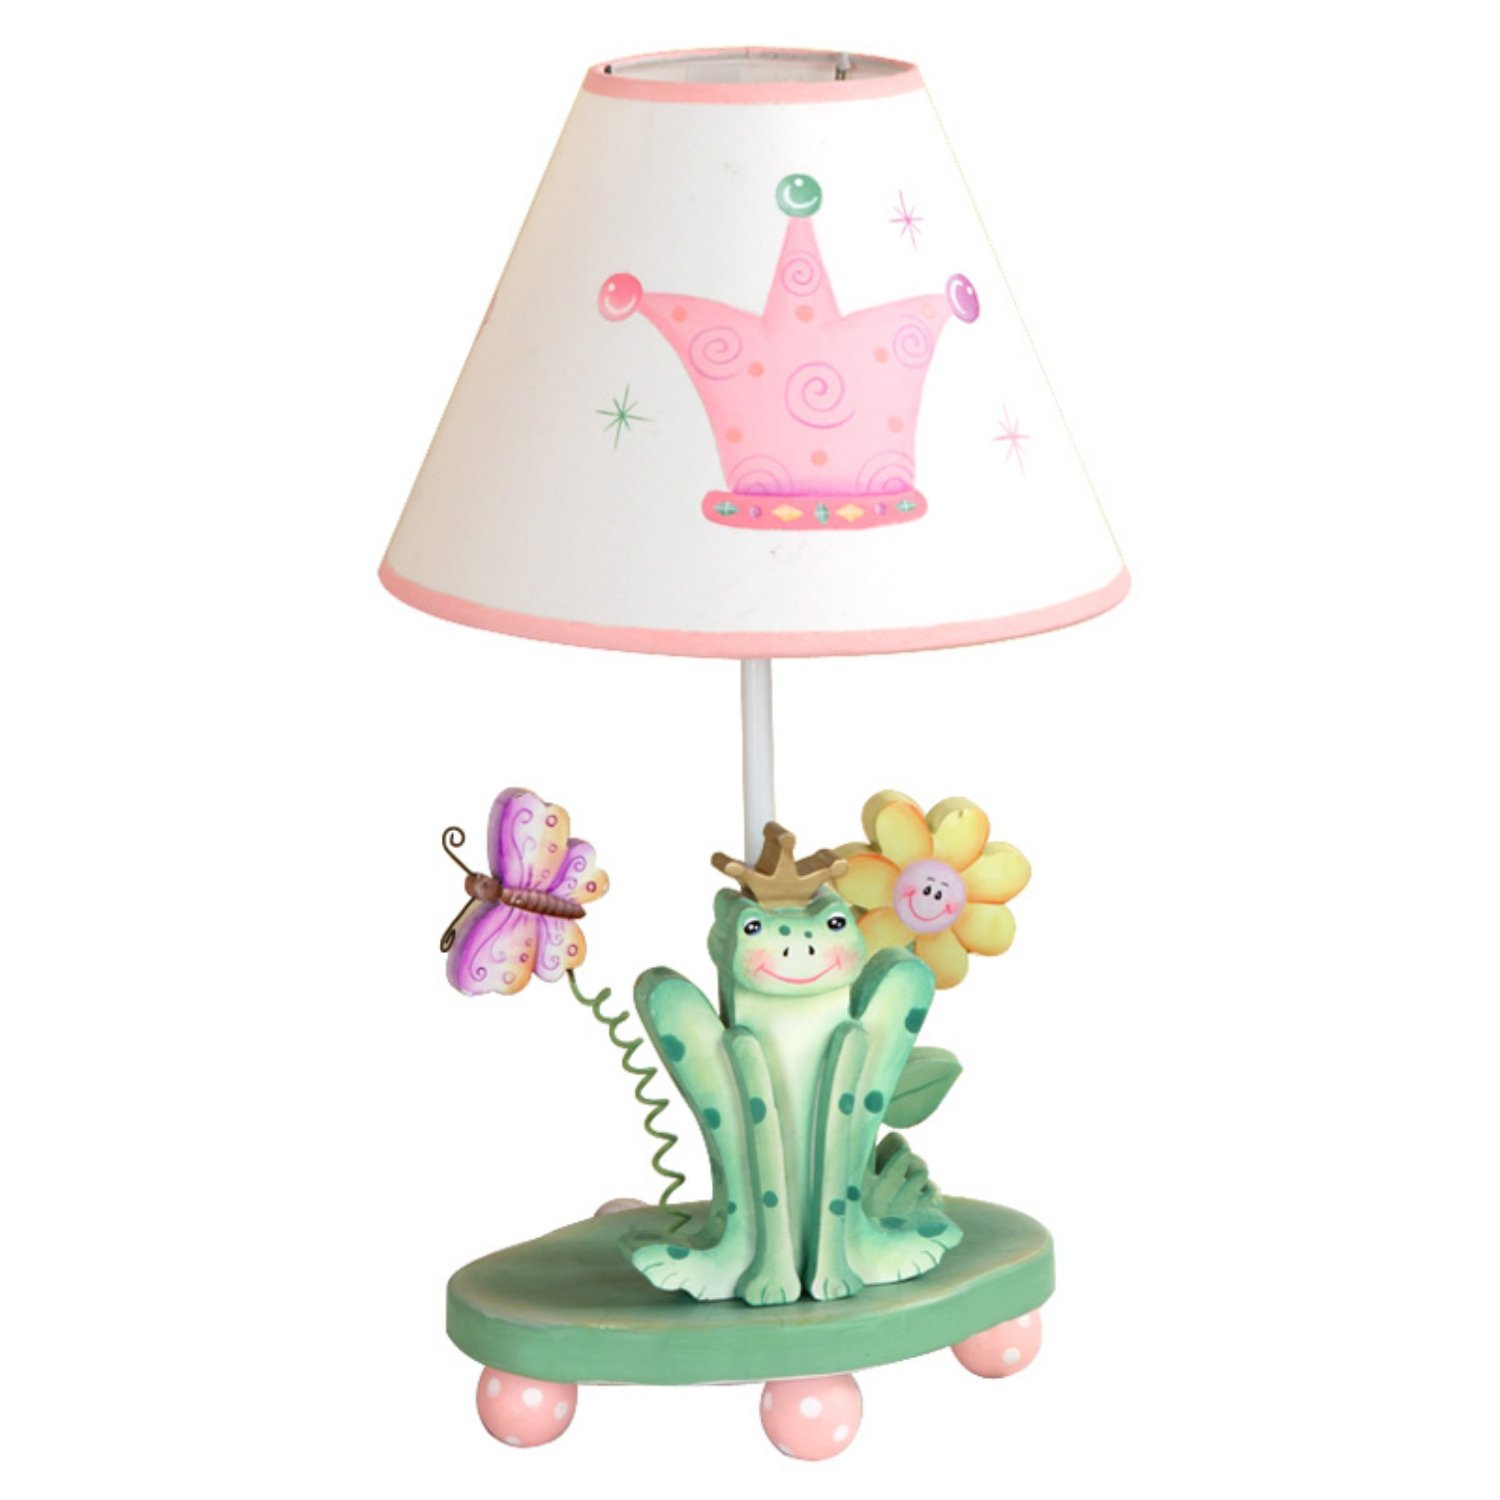 Interior Design Ideas: Cute lamps For Kids Rooms Lighting